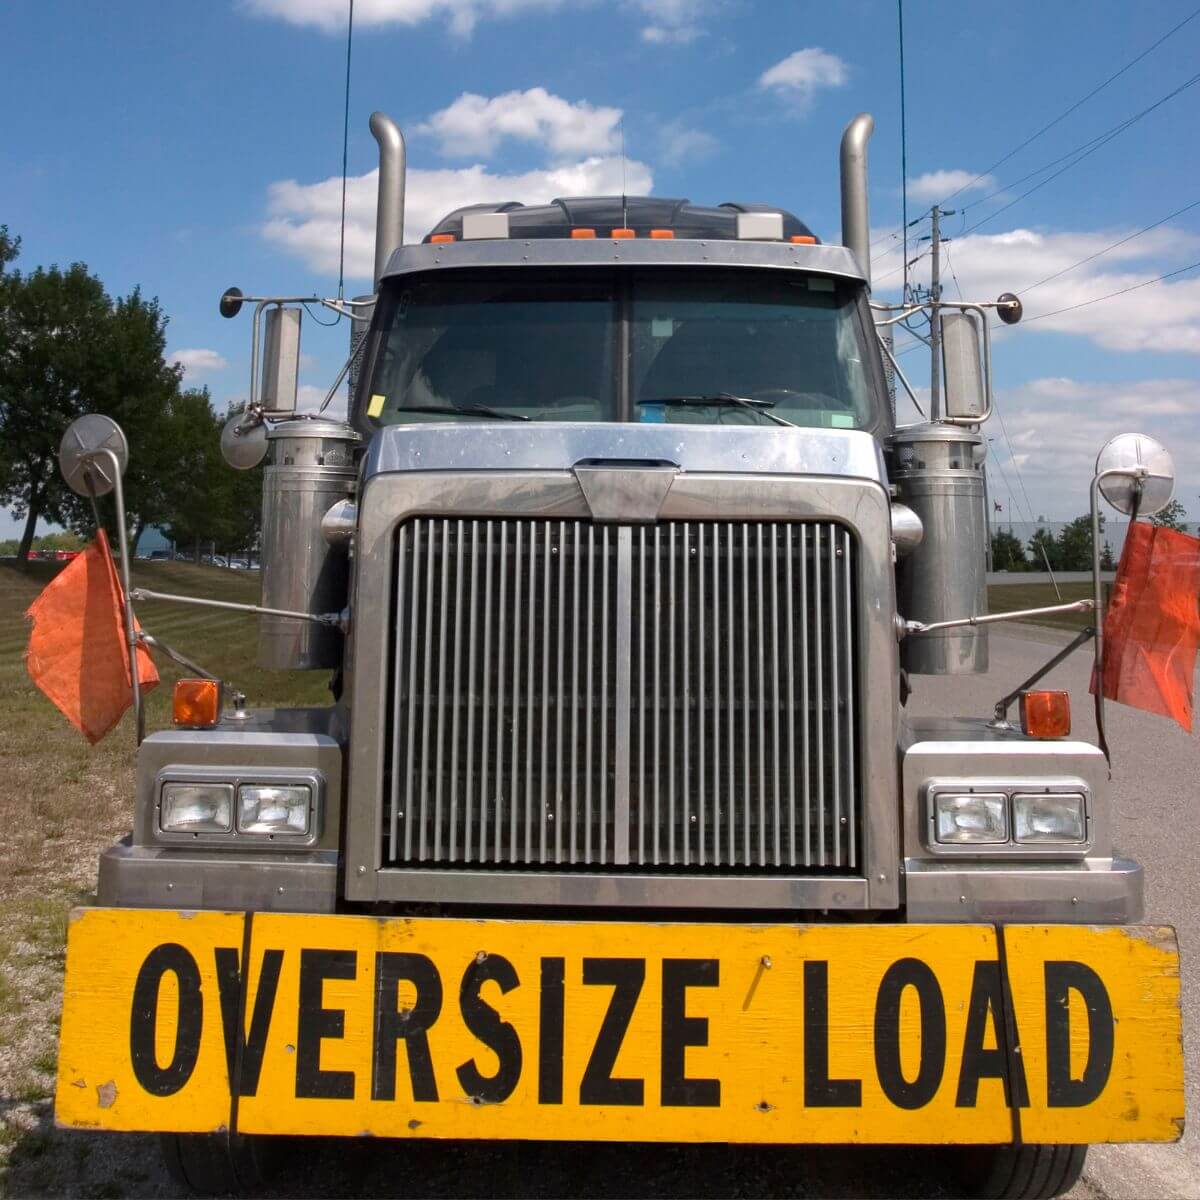 Annual Over-Dimensional Truck Permits